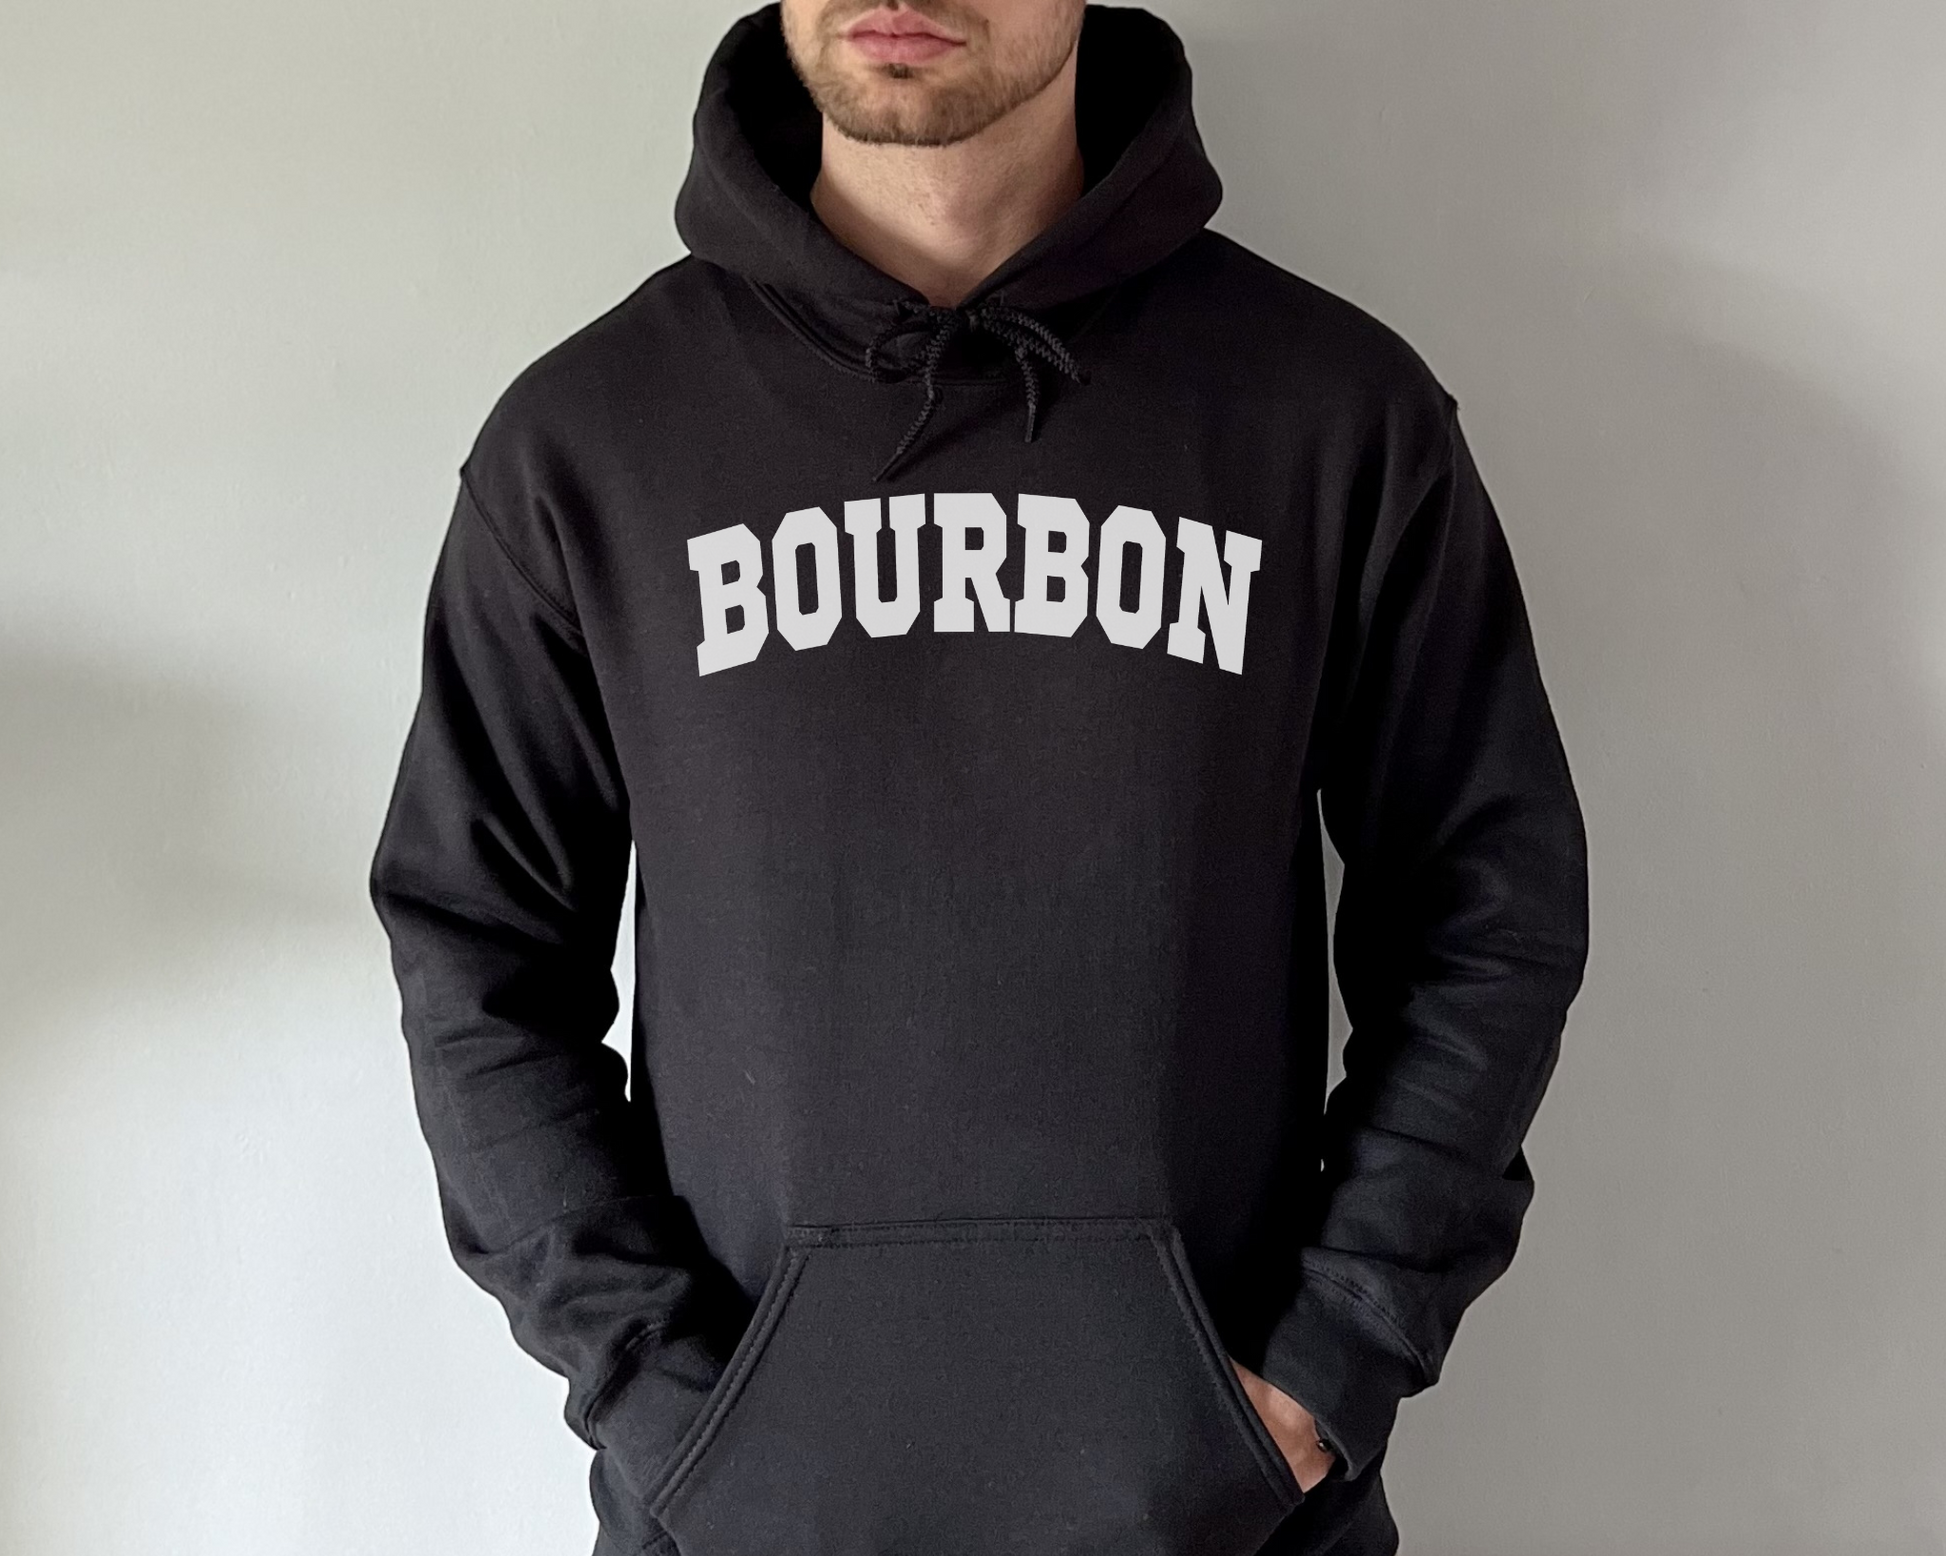 Bourbon Hoodie in Black on a Male